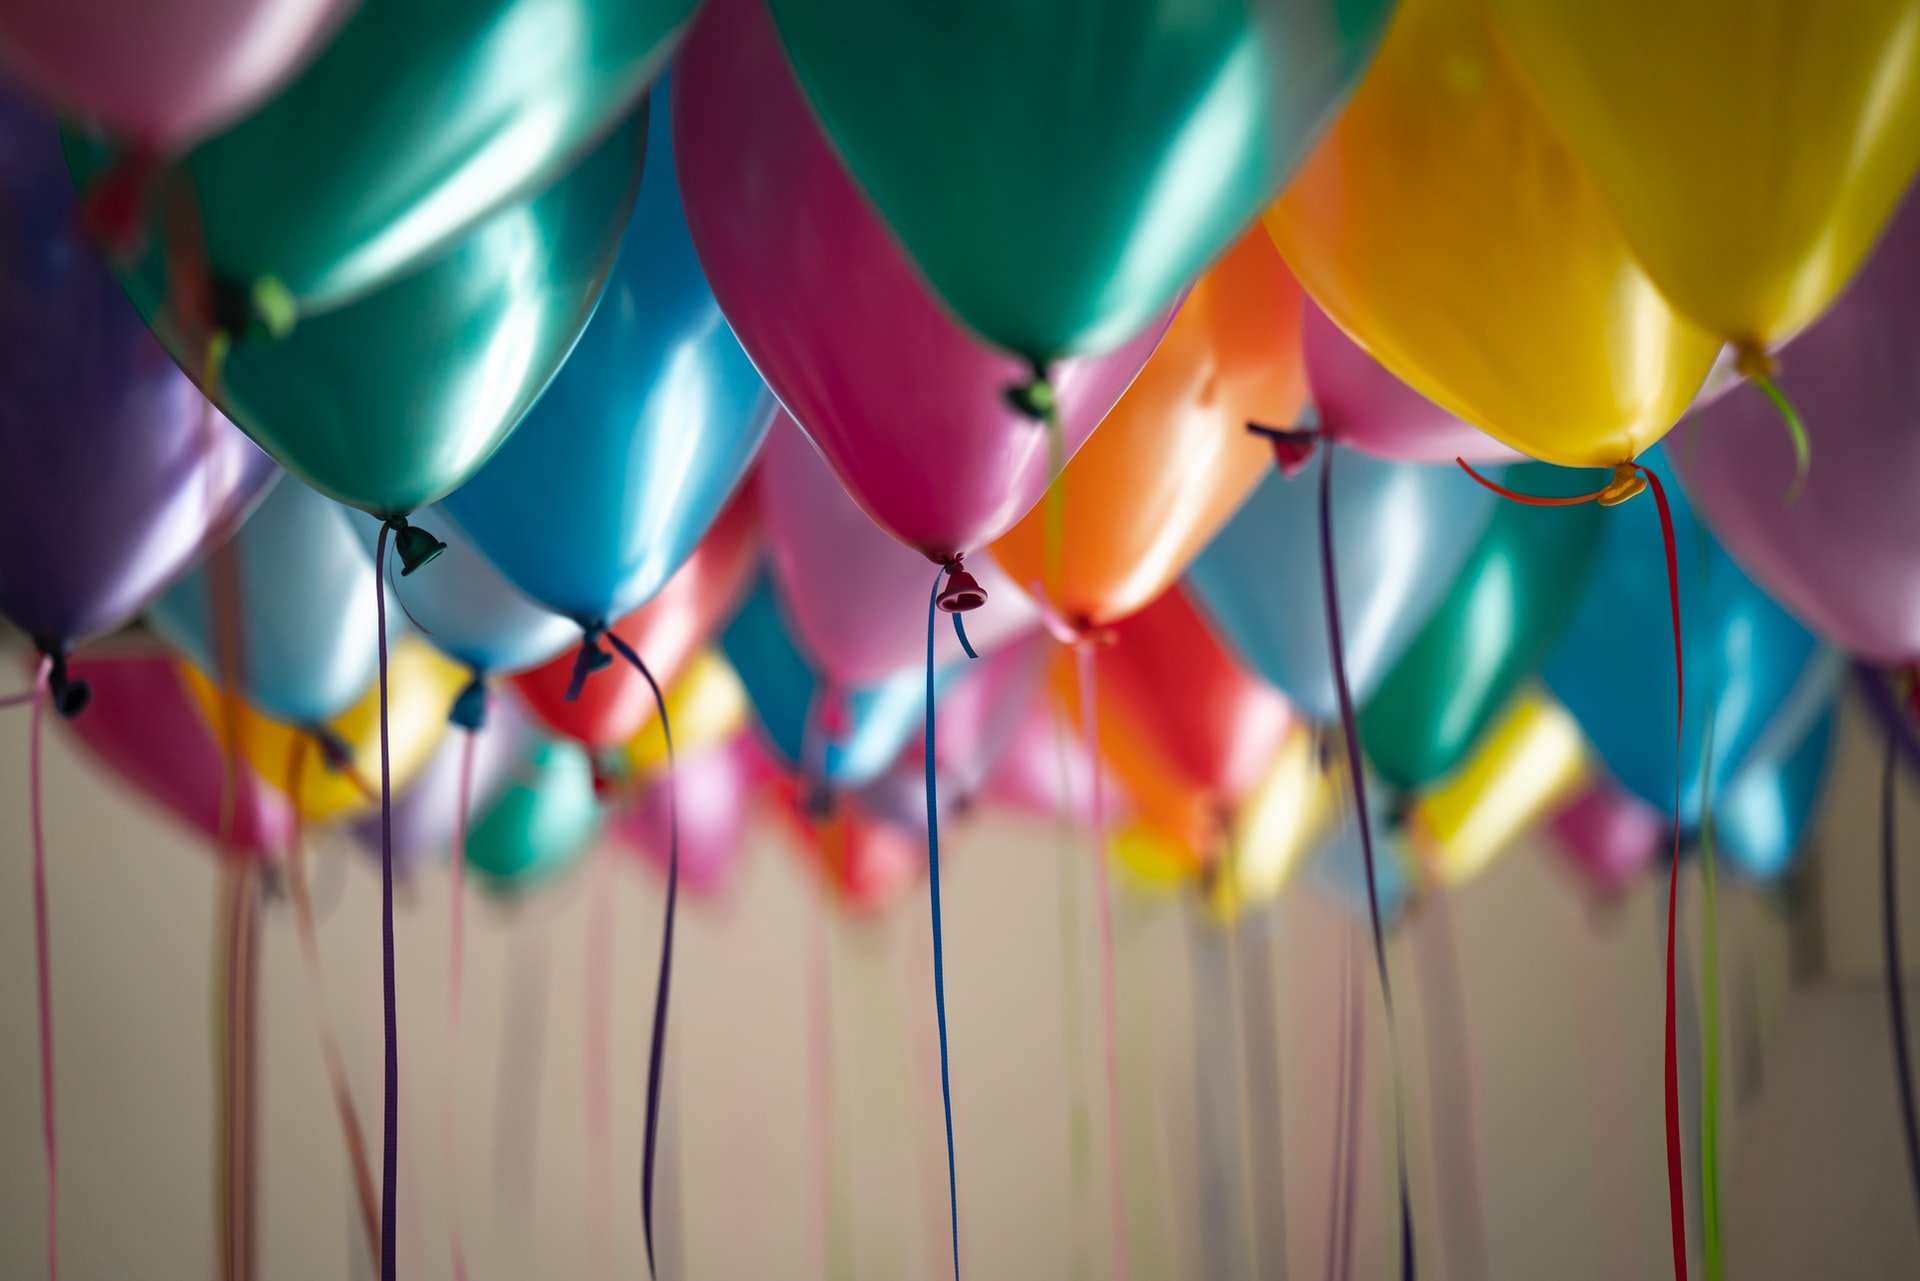 Colorful balloons | Source: Unsplash